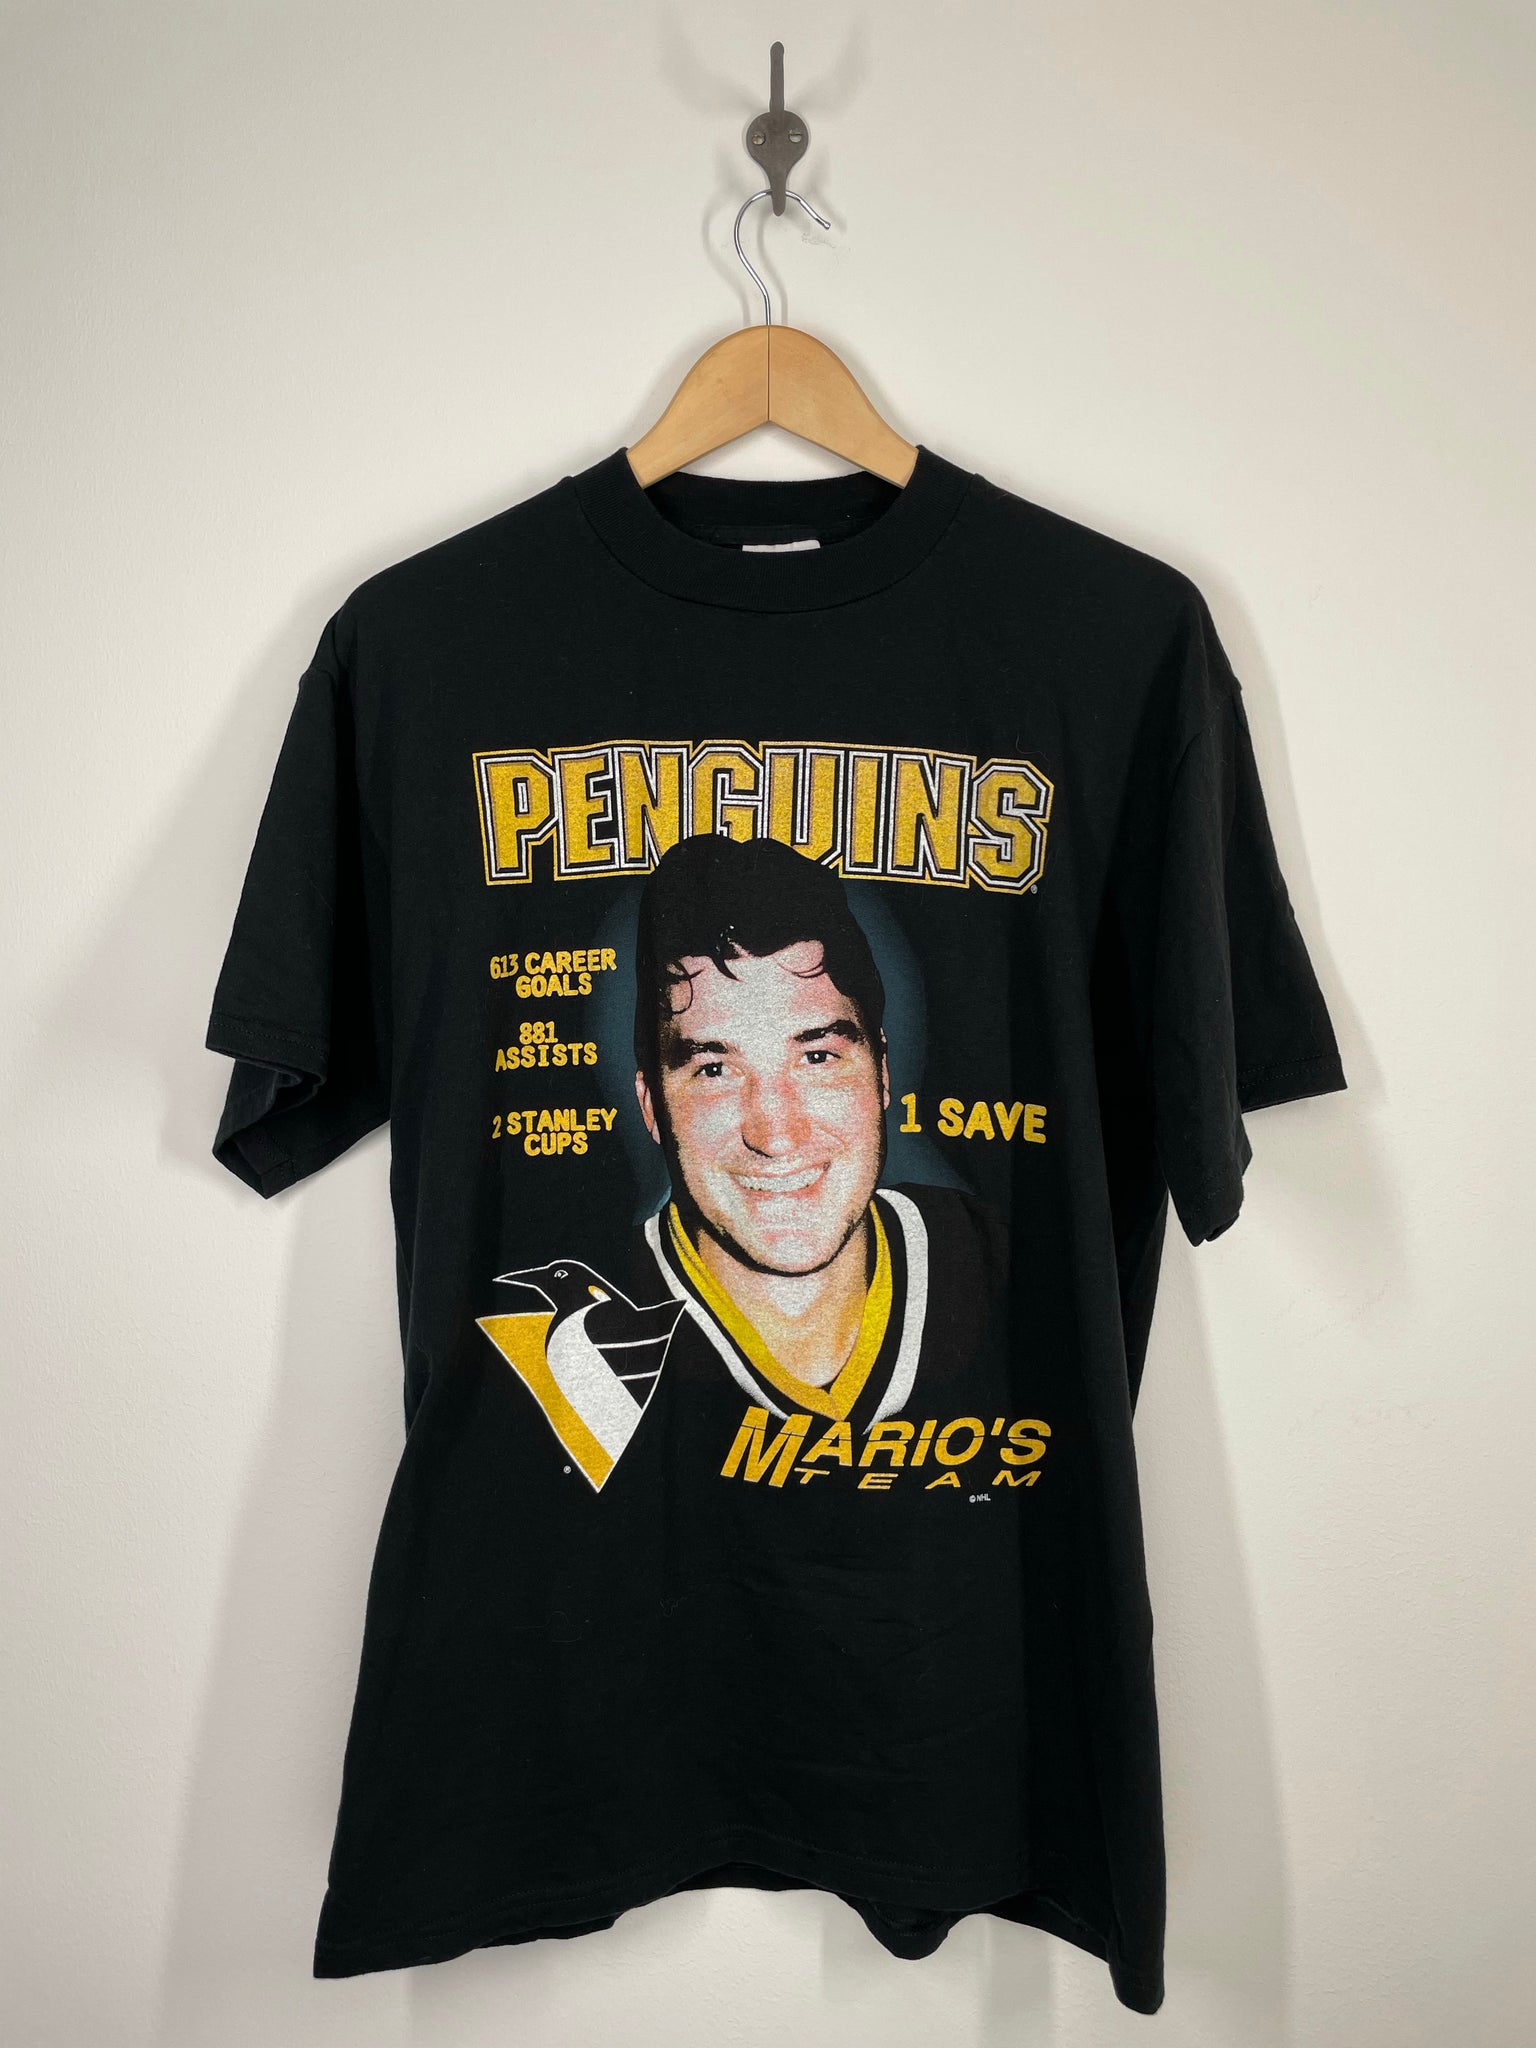 Vintage 1993 NHL Pittsburgh Penguins Crew Neck Sweatshirt